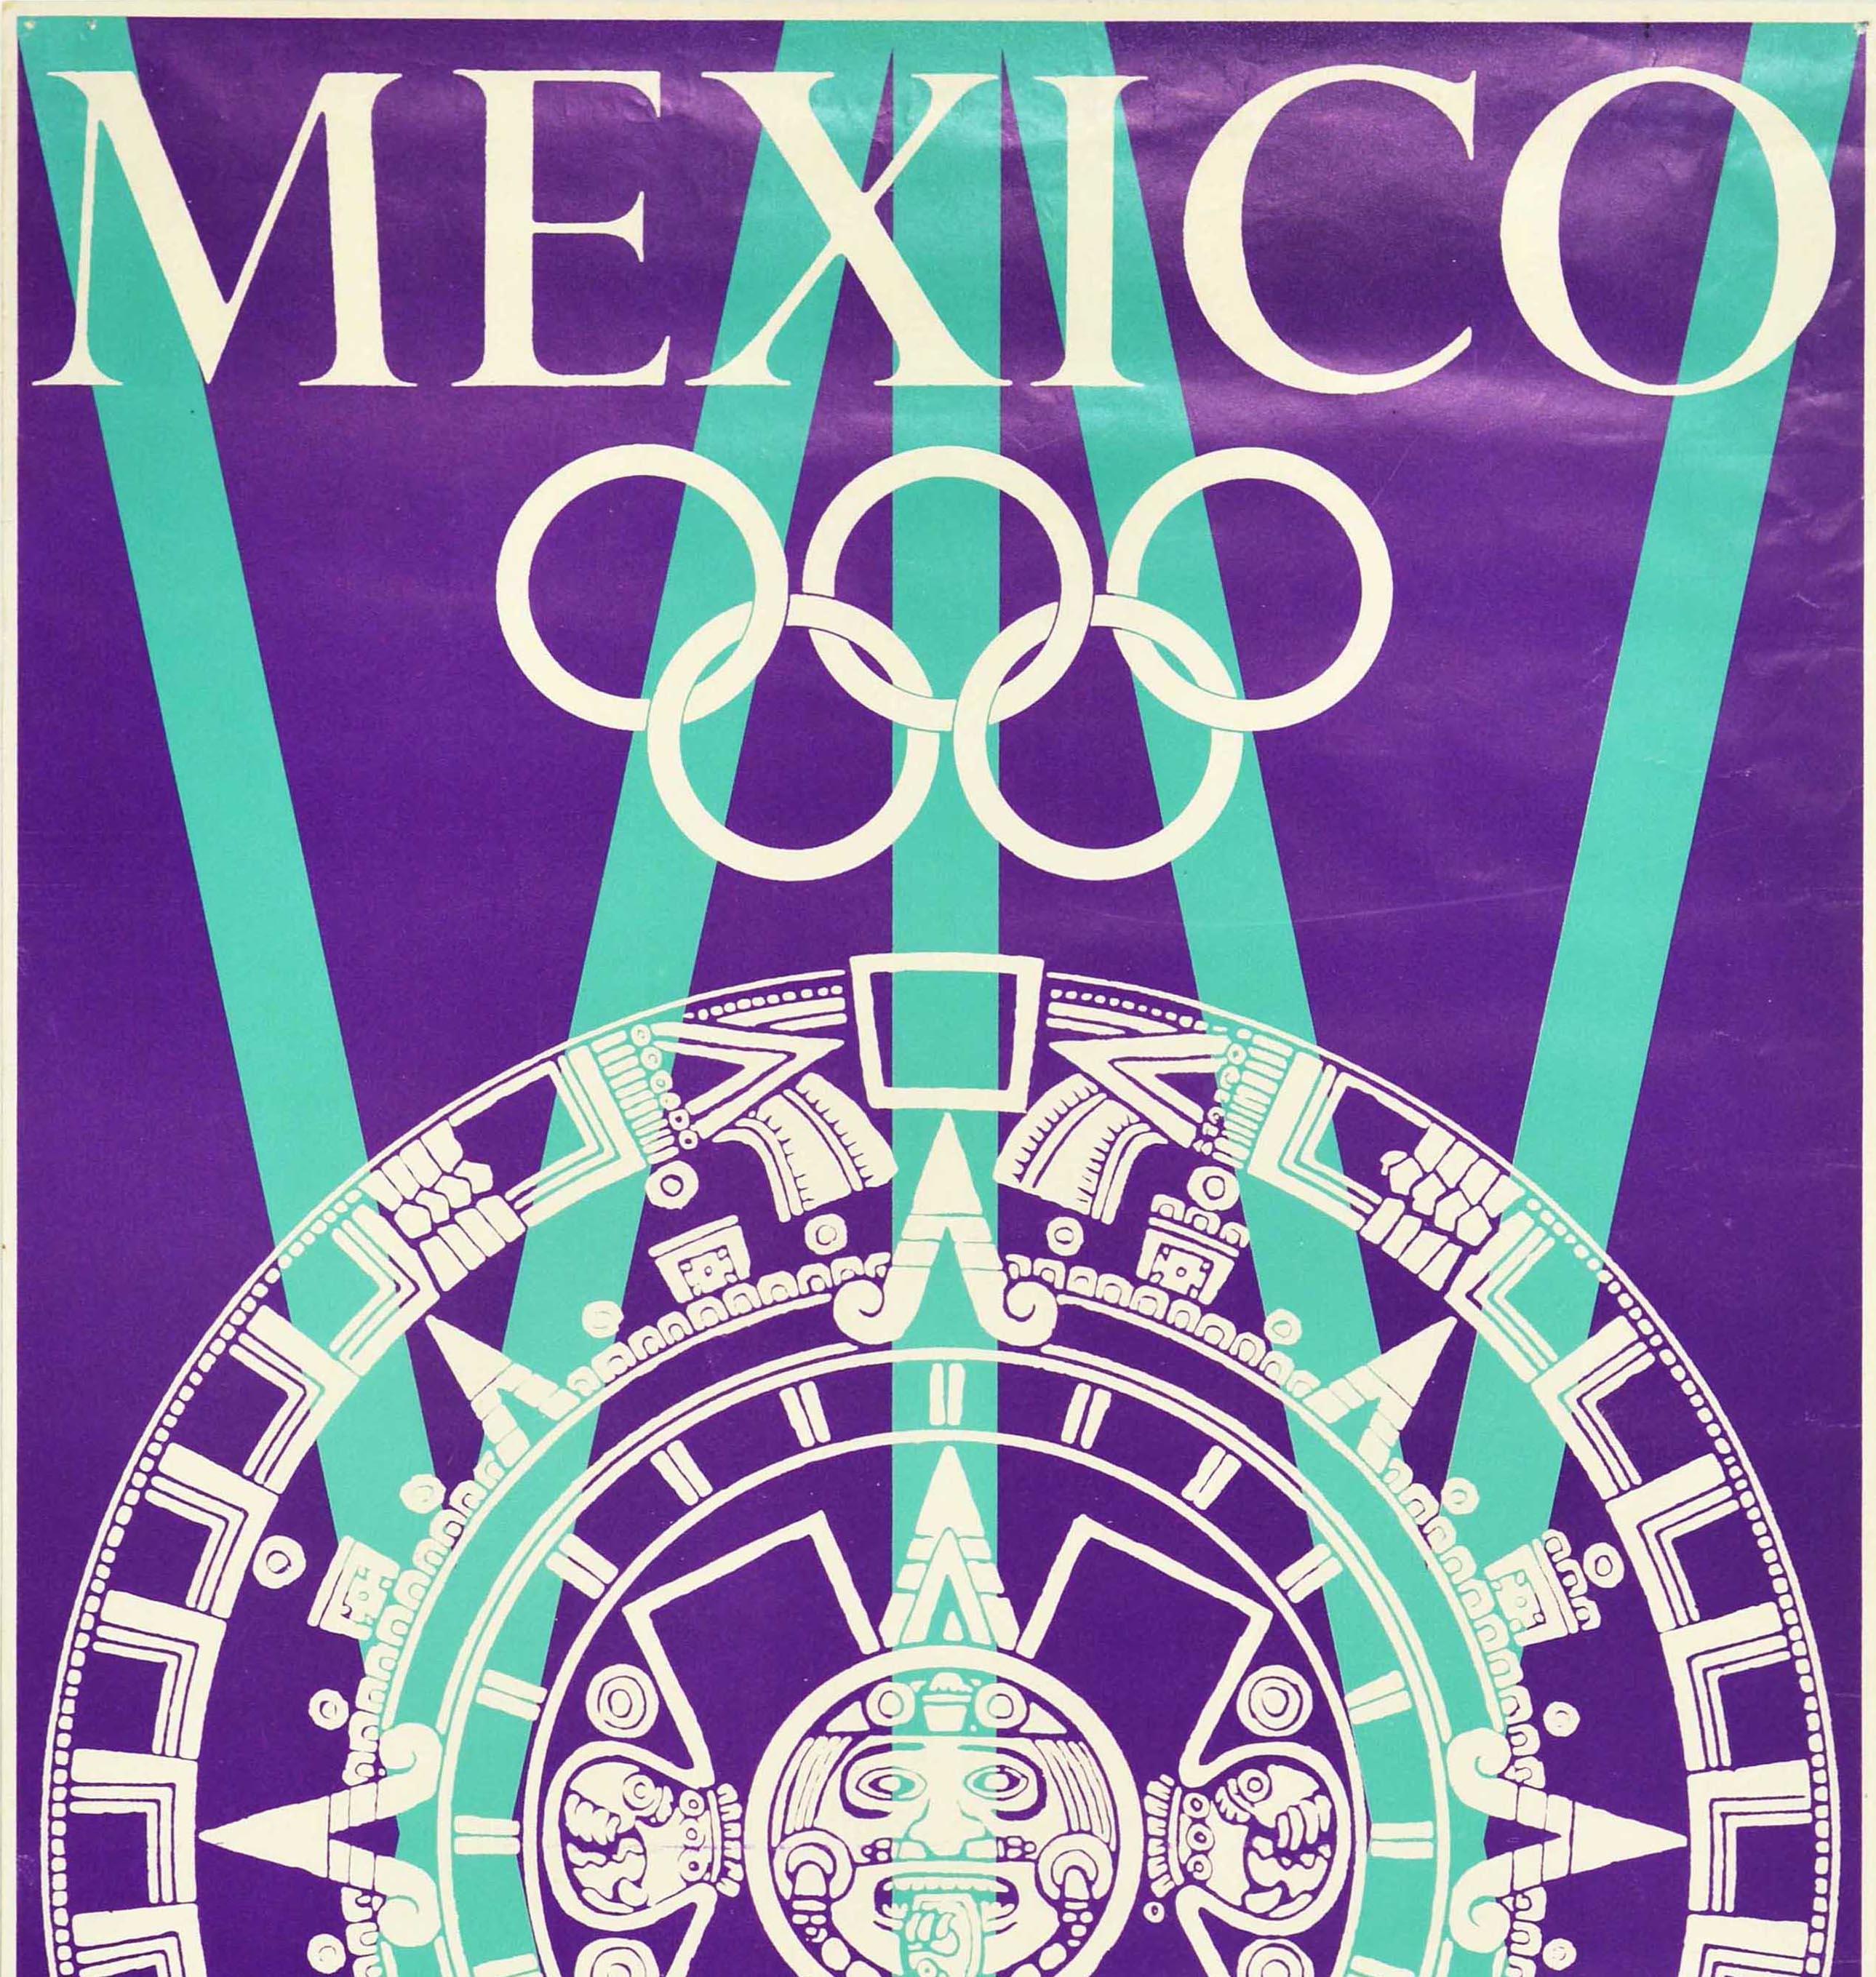 mexico 1968 poster